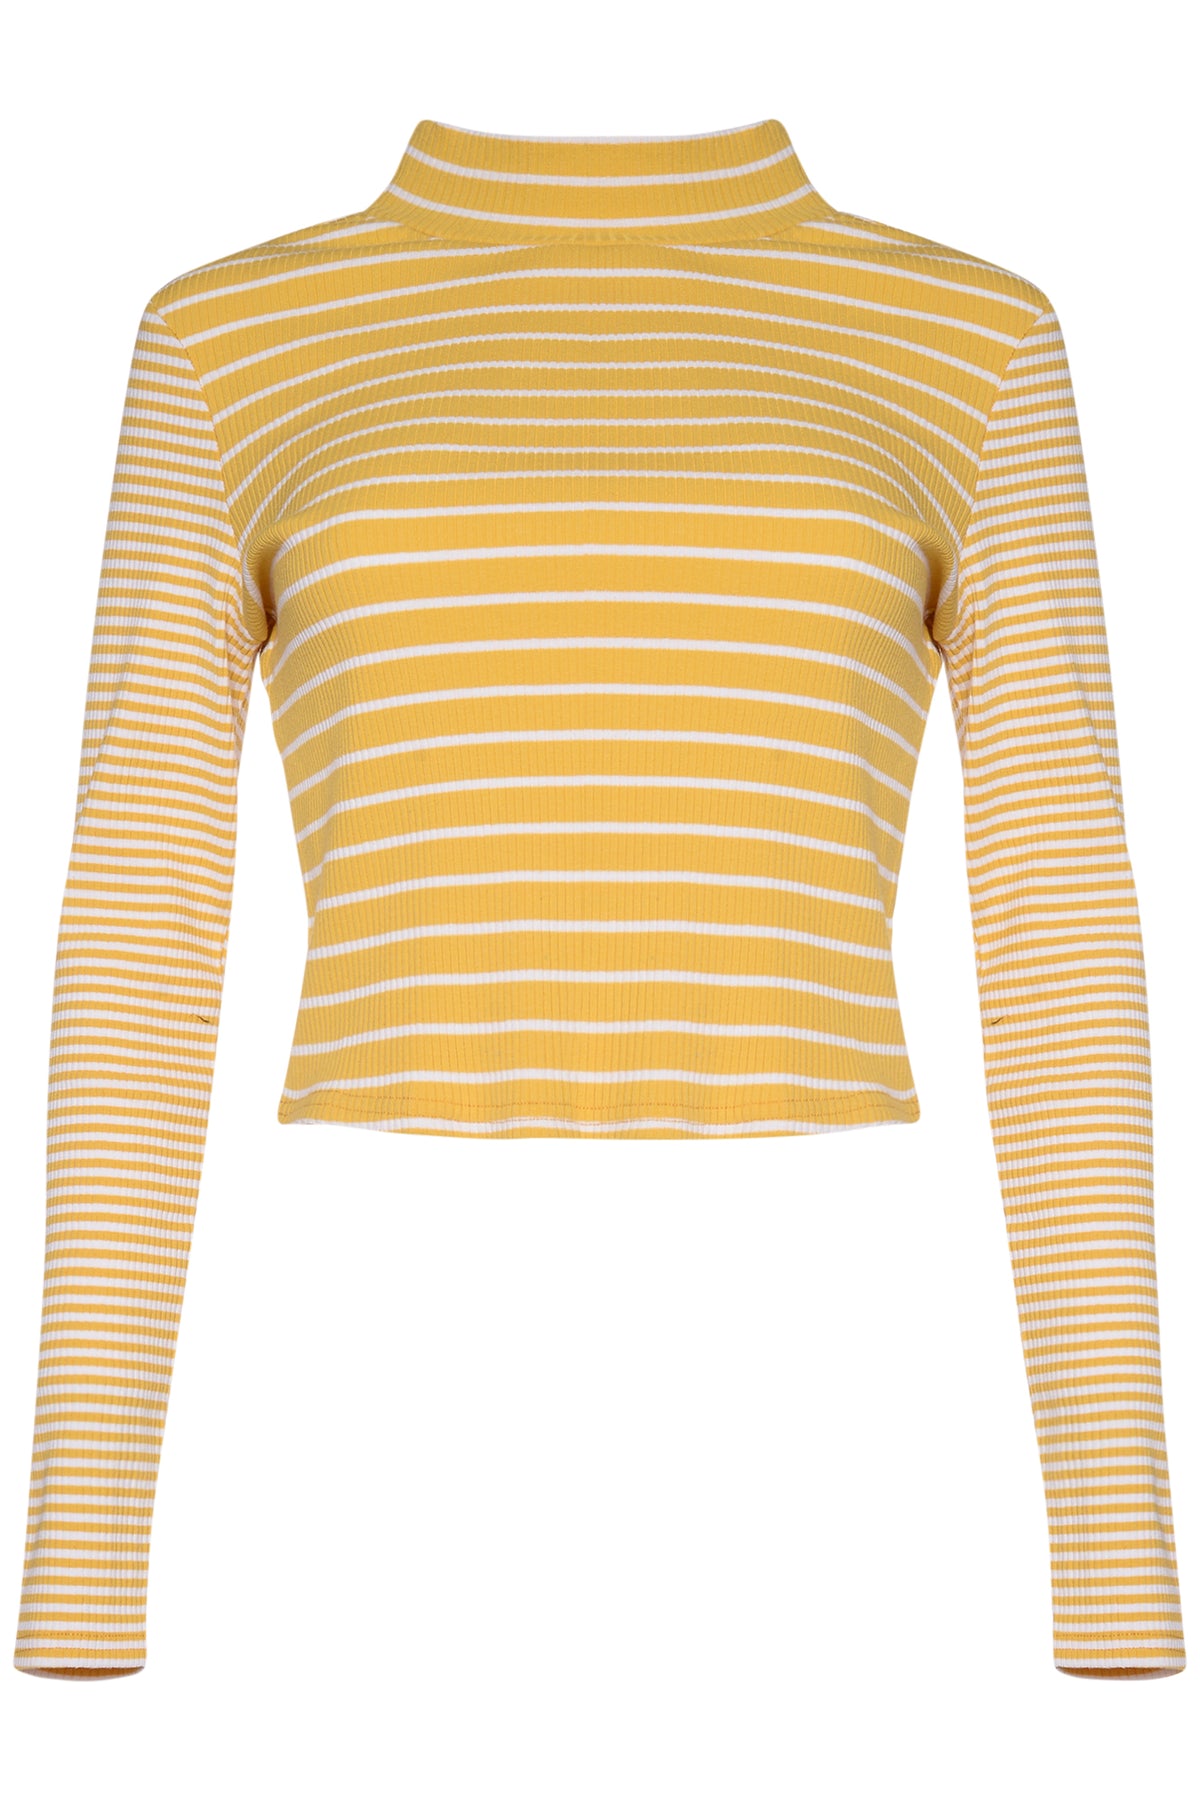 Glamorous Yellow White Stripe High Neck Crop Top